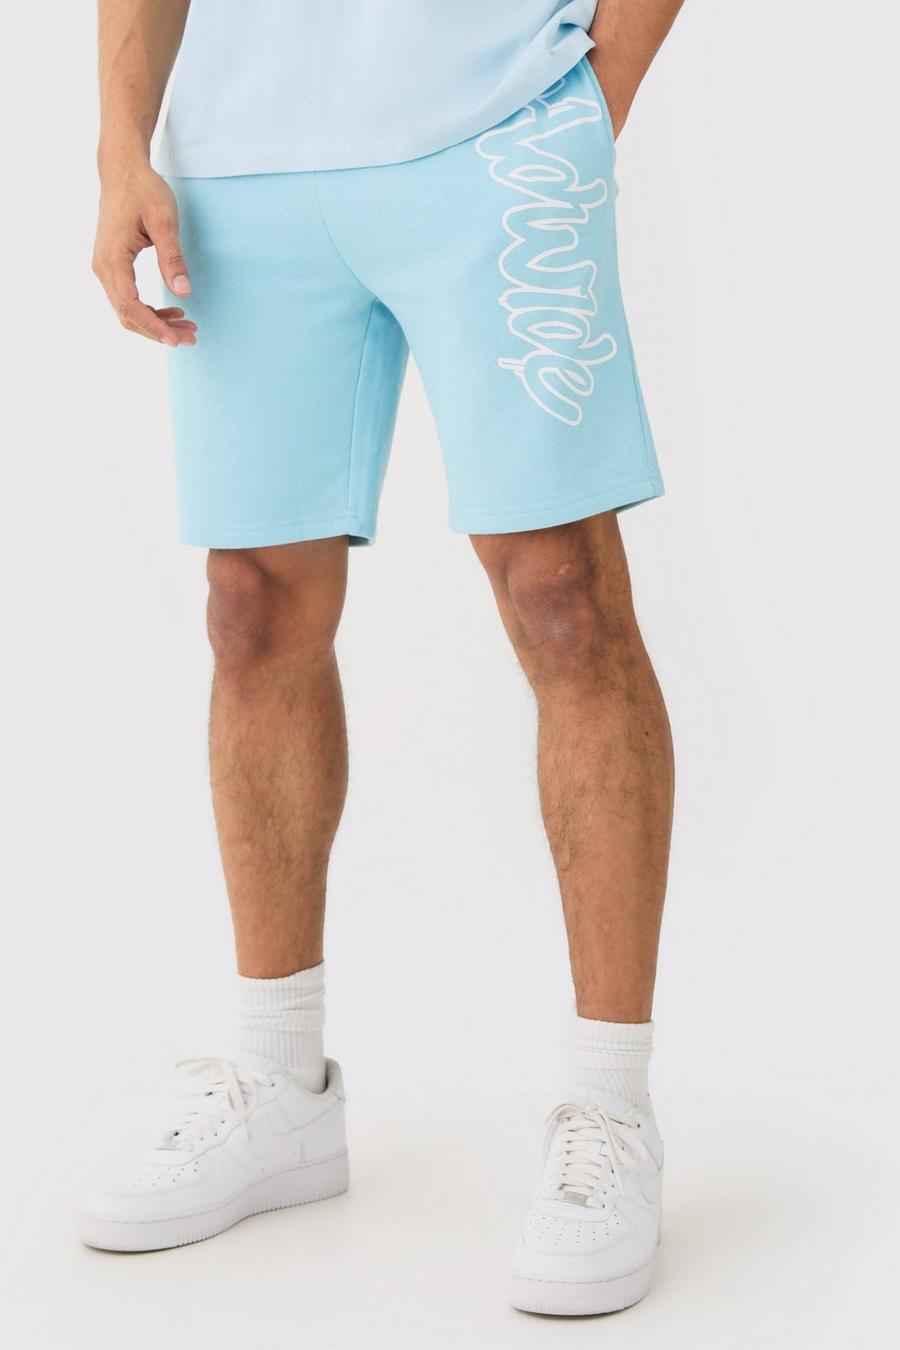 Lockere Shorts mit Worldwide-Print, Light blue